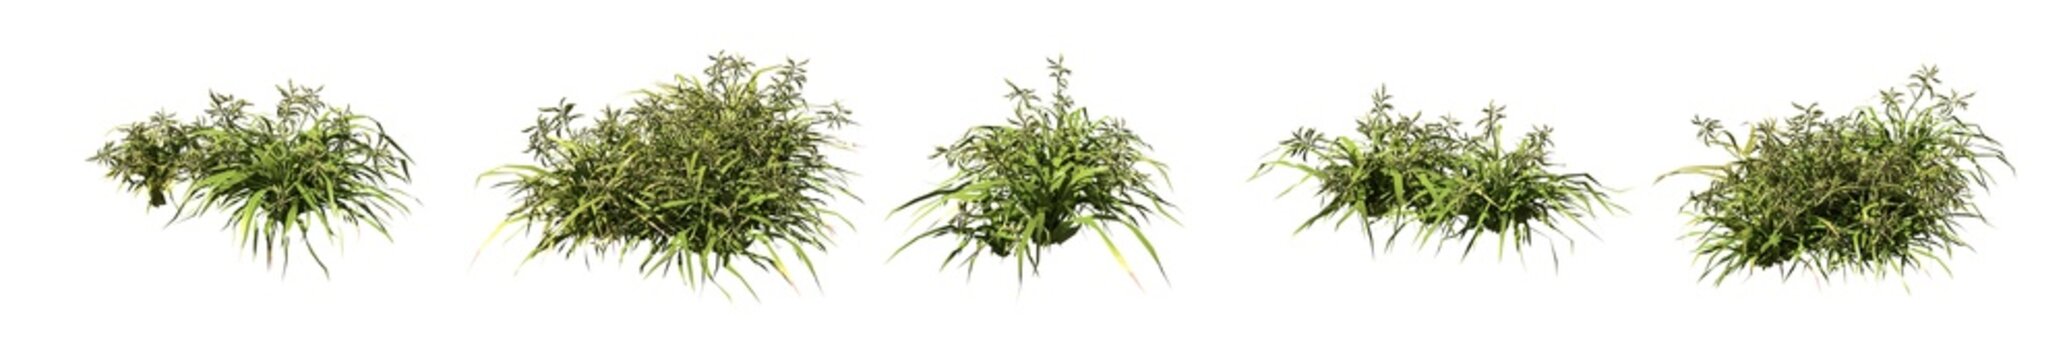 Set of grass bushes isolated. Dallisgrass. Paspalum dilatatum. 3D illustration